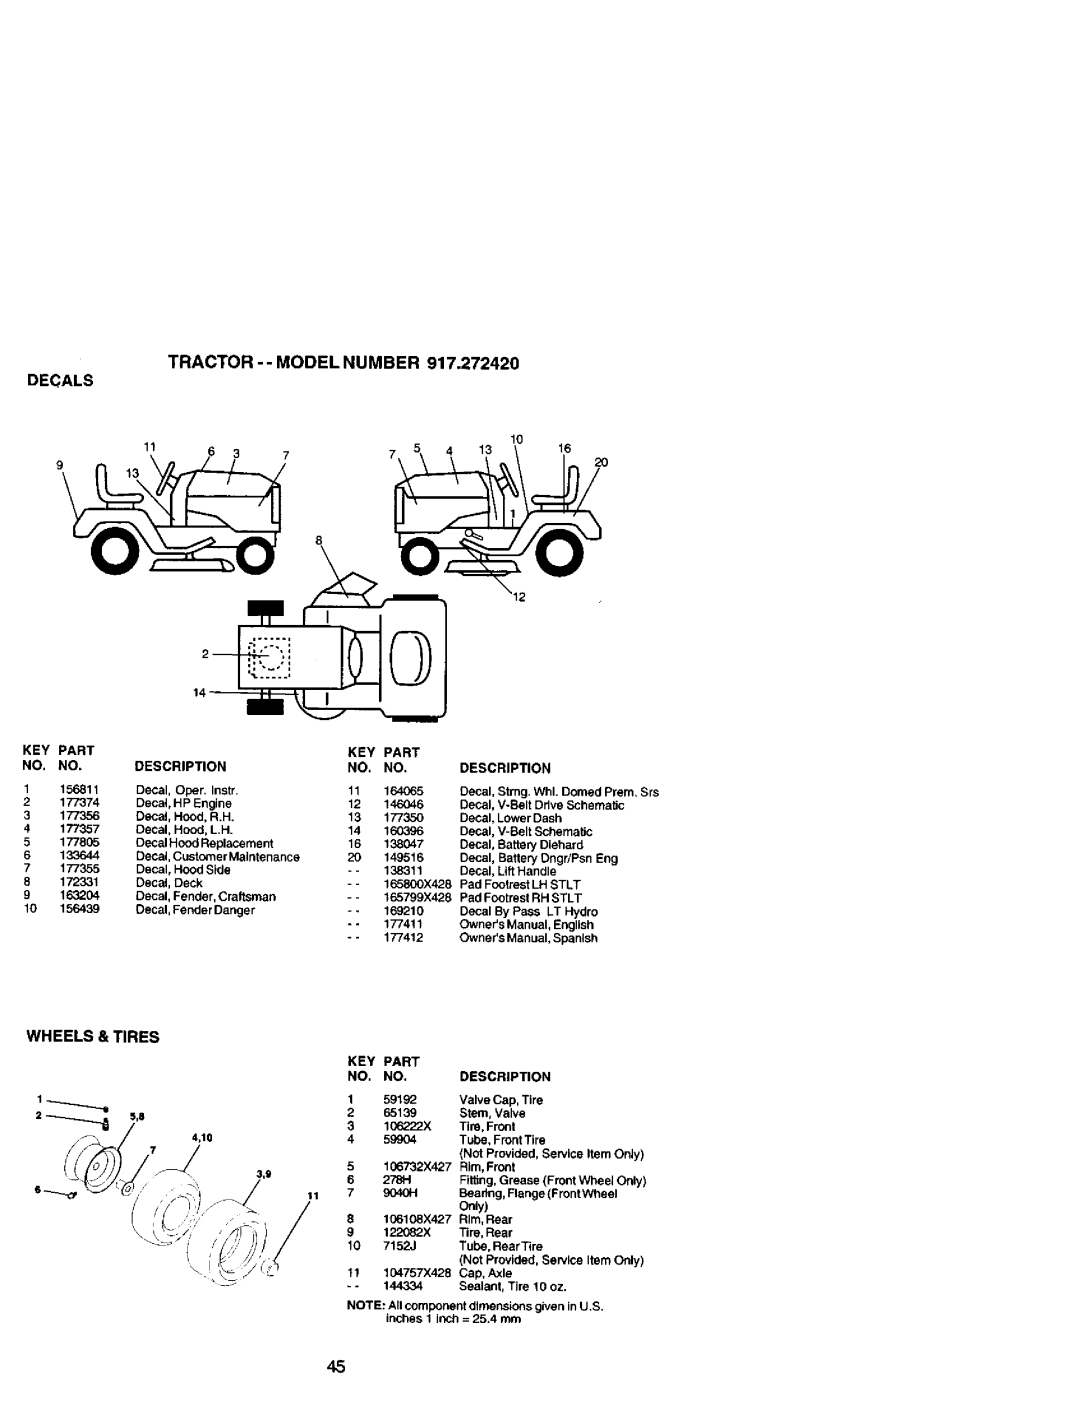 Craftsman 917.27242 owner manual Tractor -- Model Number, Decals, Wheels & Tires 